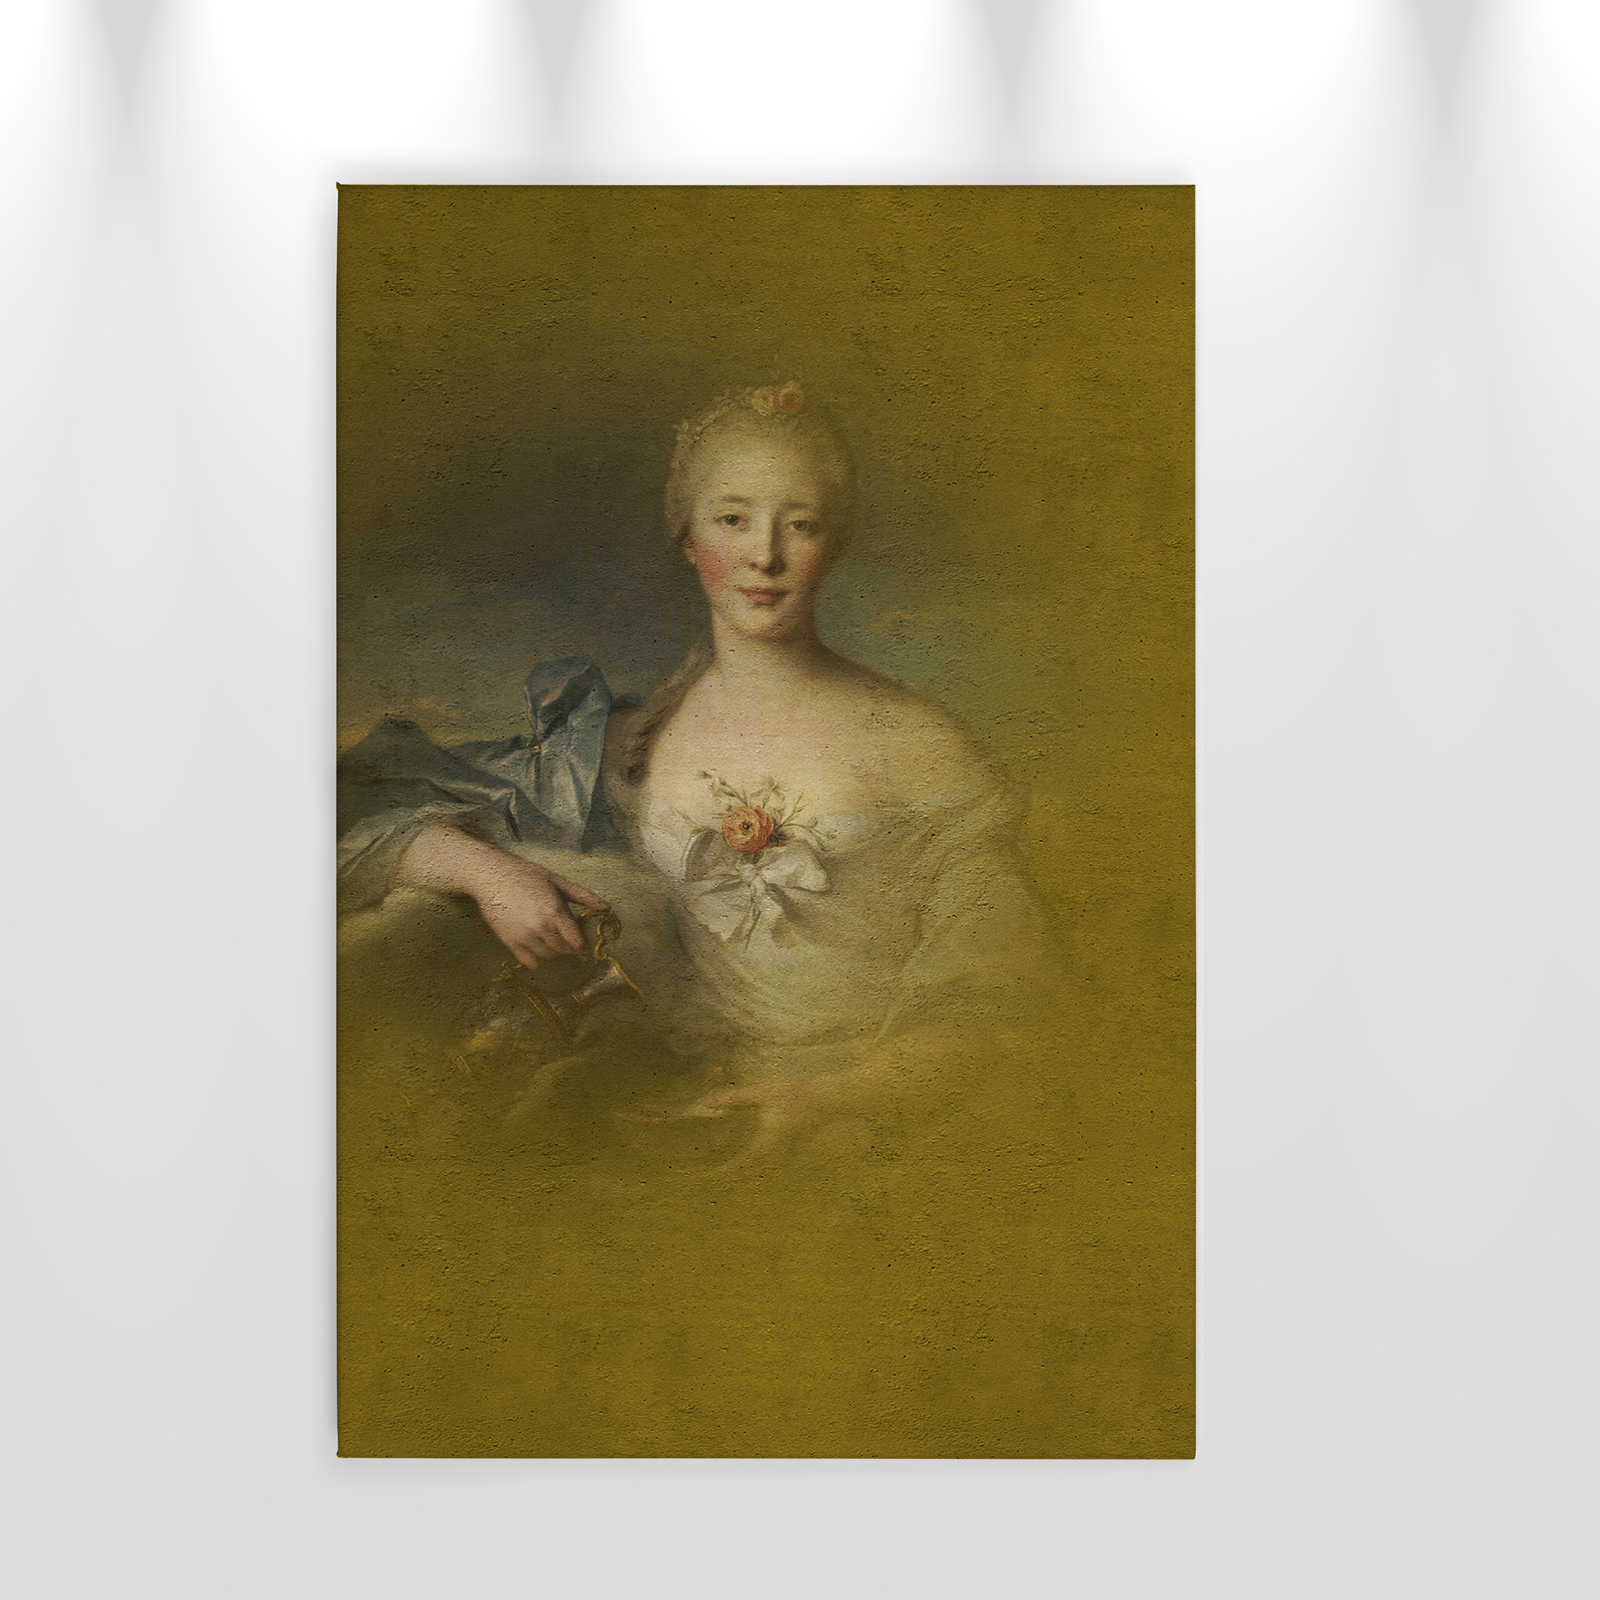             Canvas painting classic portrait young lady - 0,60 m x 0,90 m
        